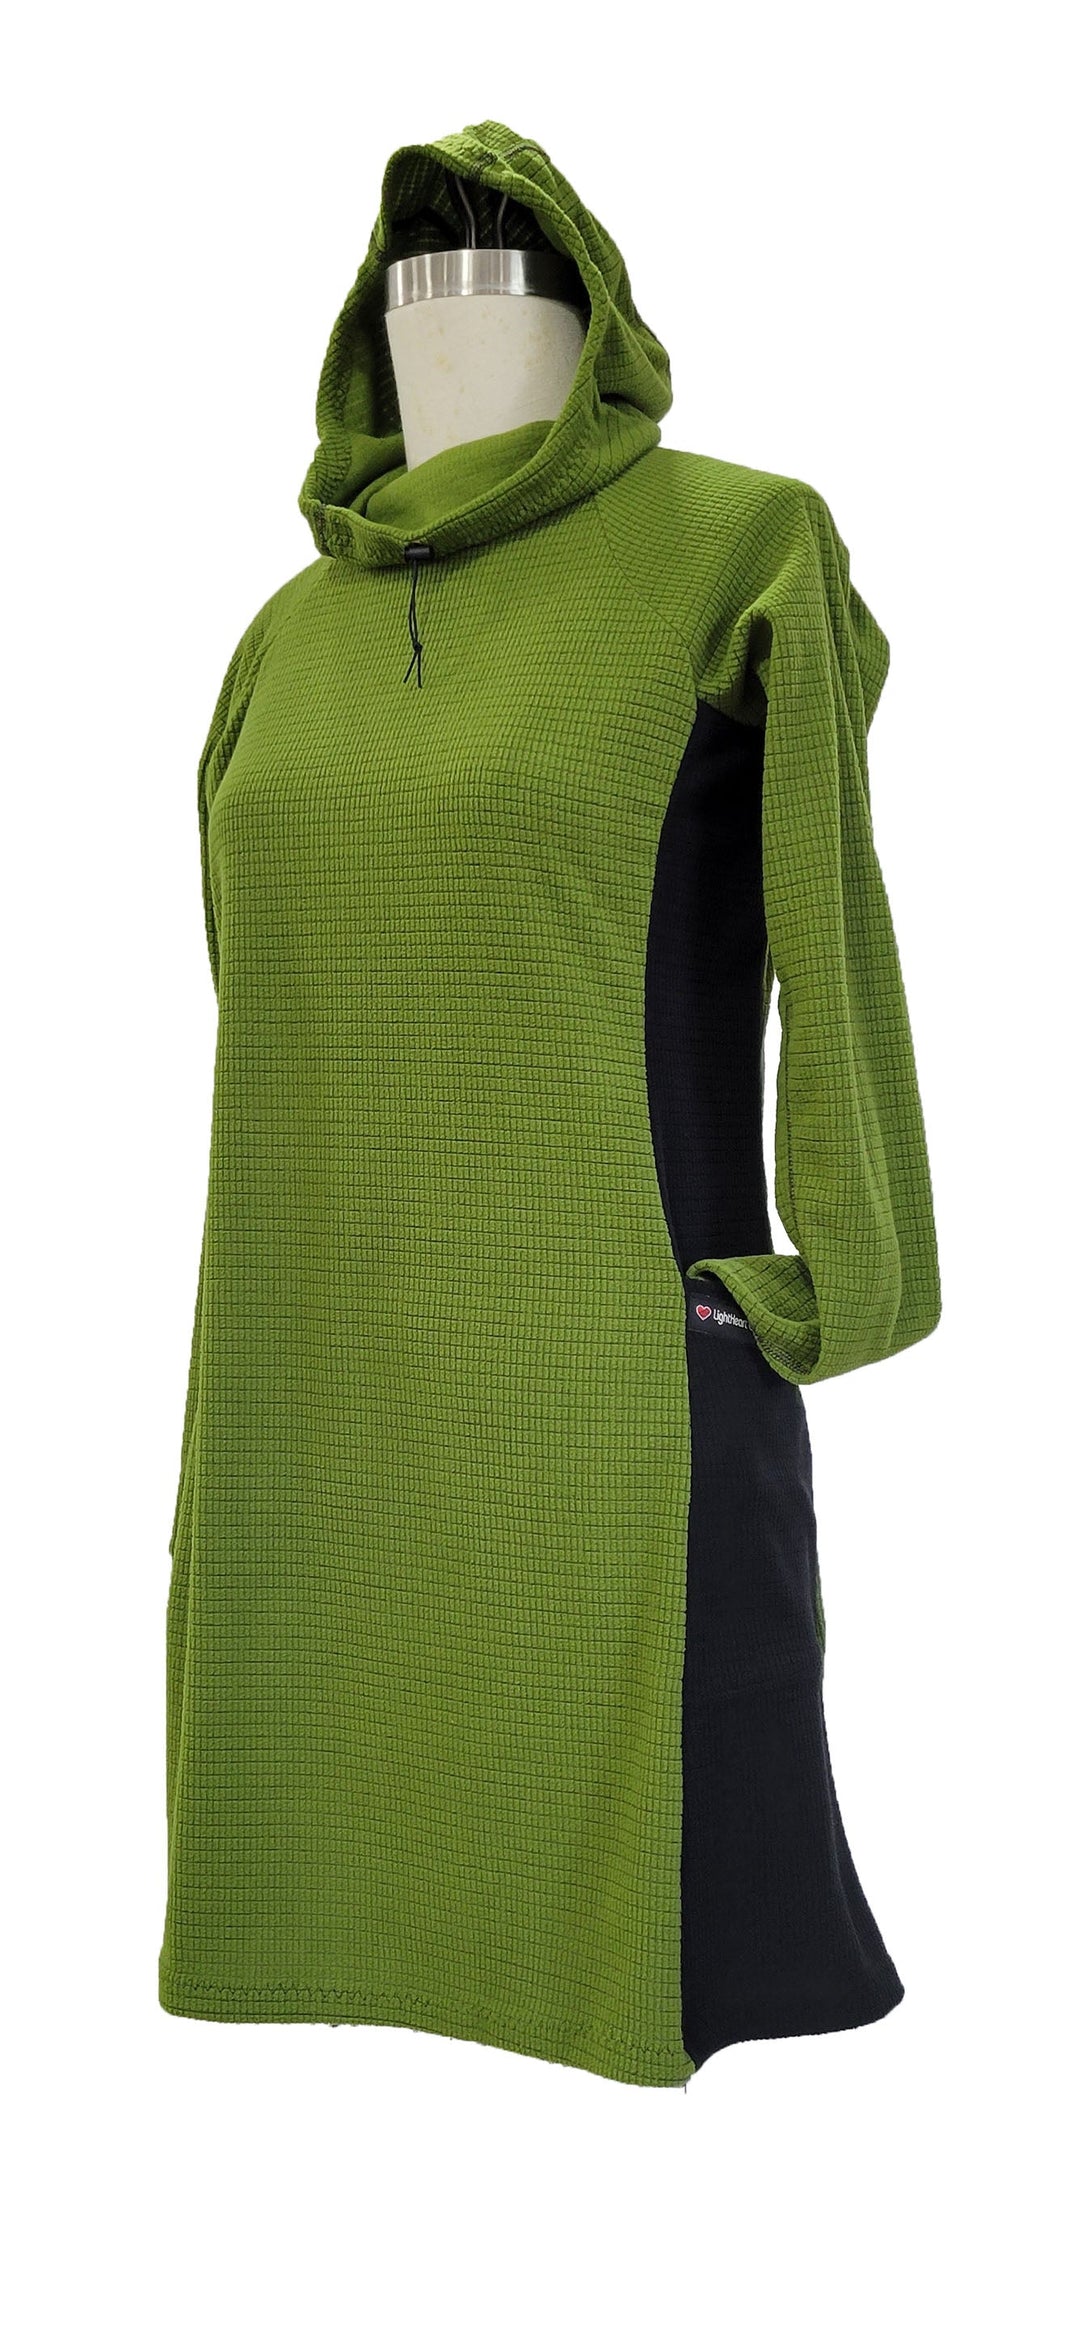 Fleece dress - Green & Black sides